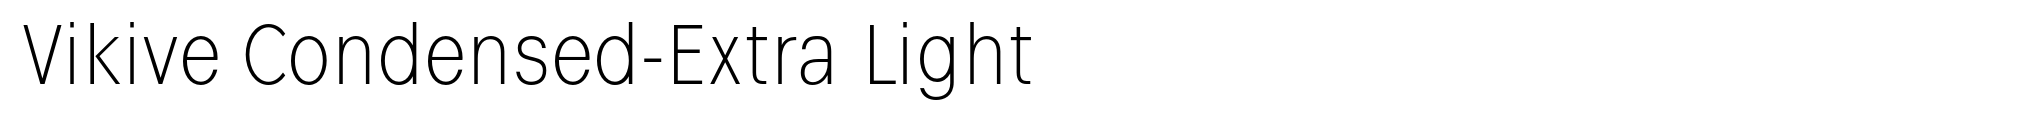 Vikive Condensed-Extra Light image